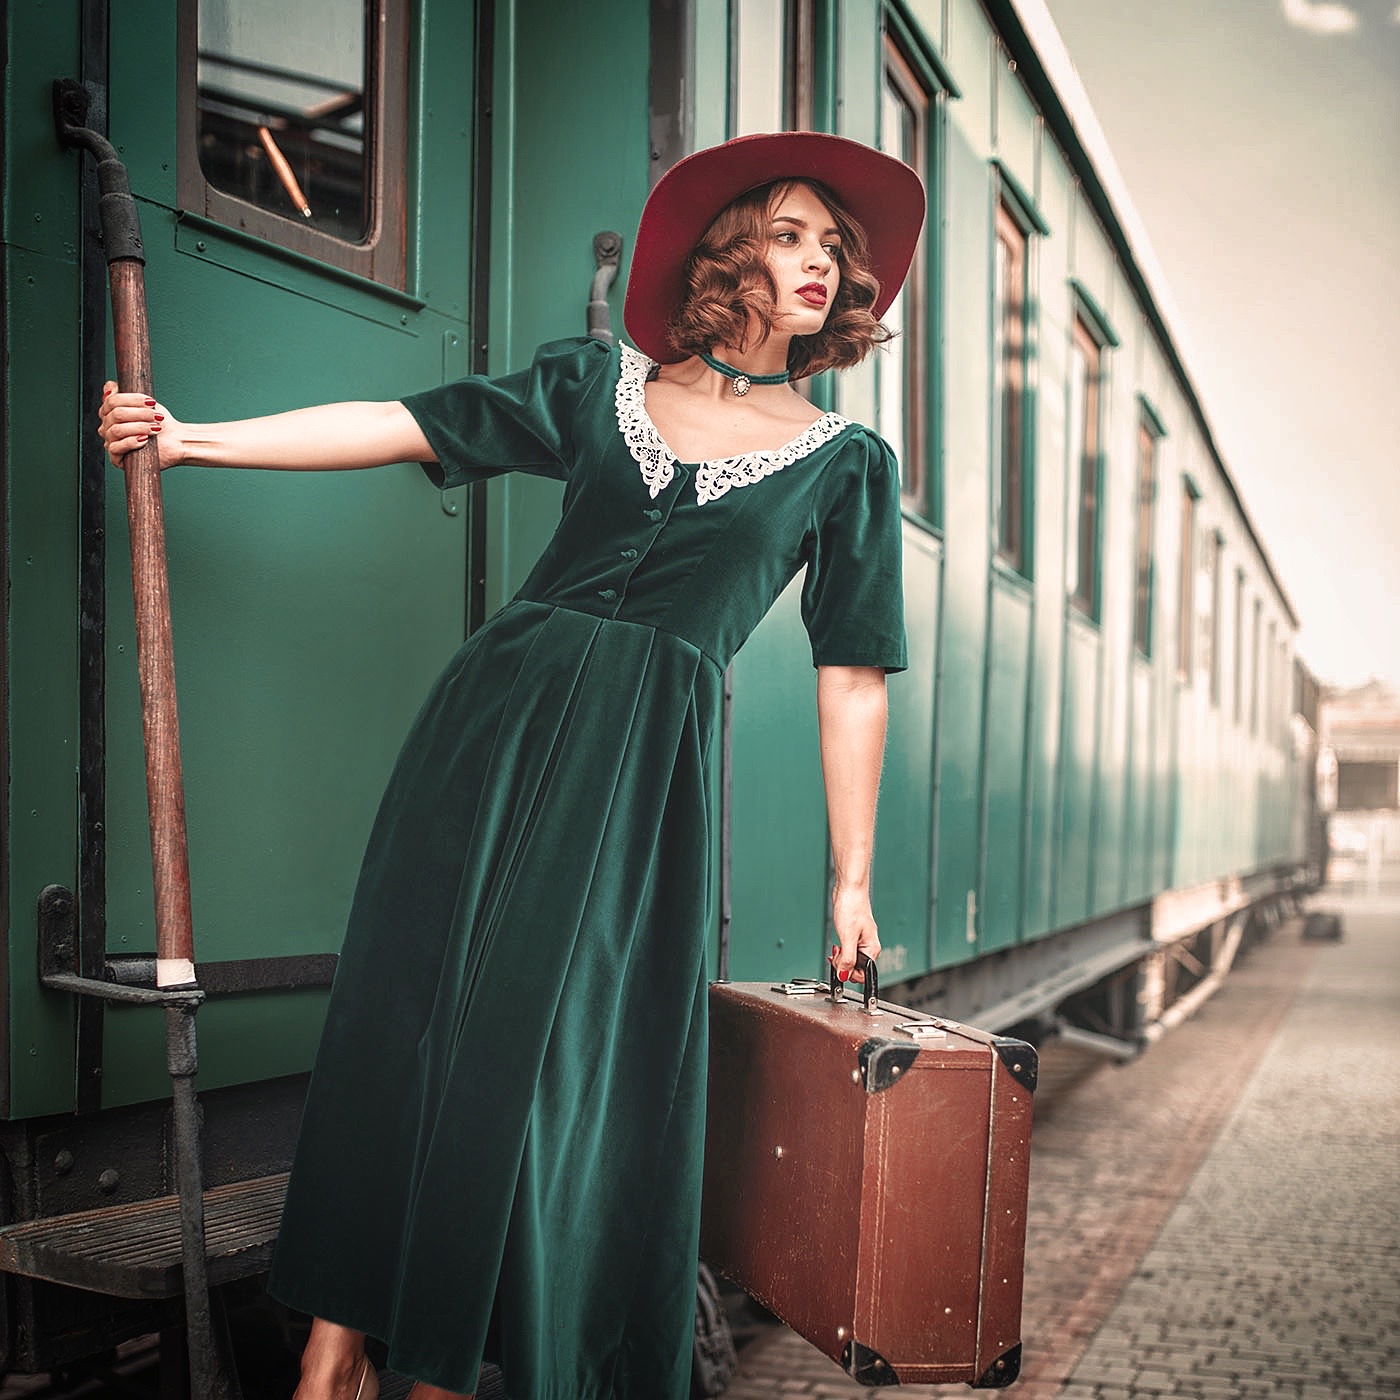 Woman in red hat on vintage steam locomotive. Old train. Railway engine, railroad journey